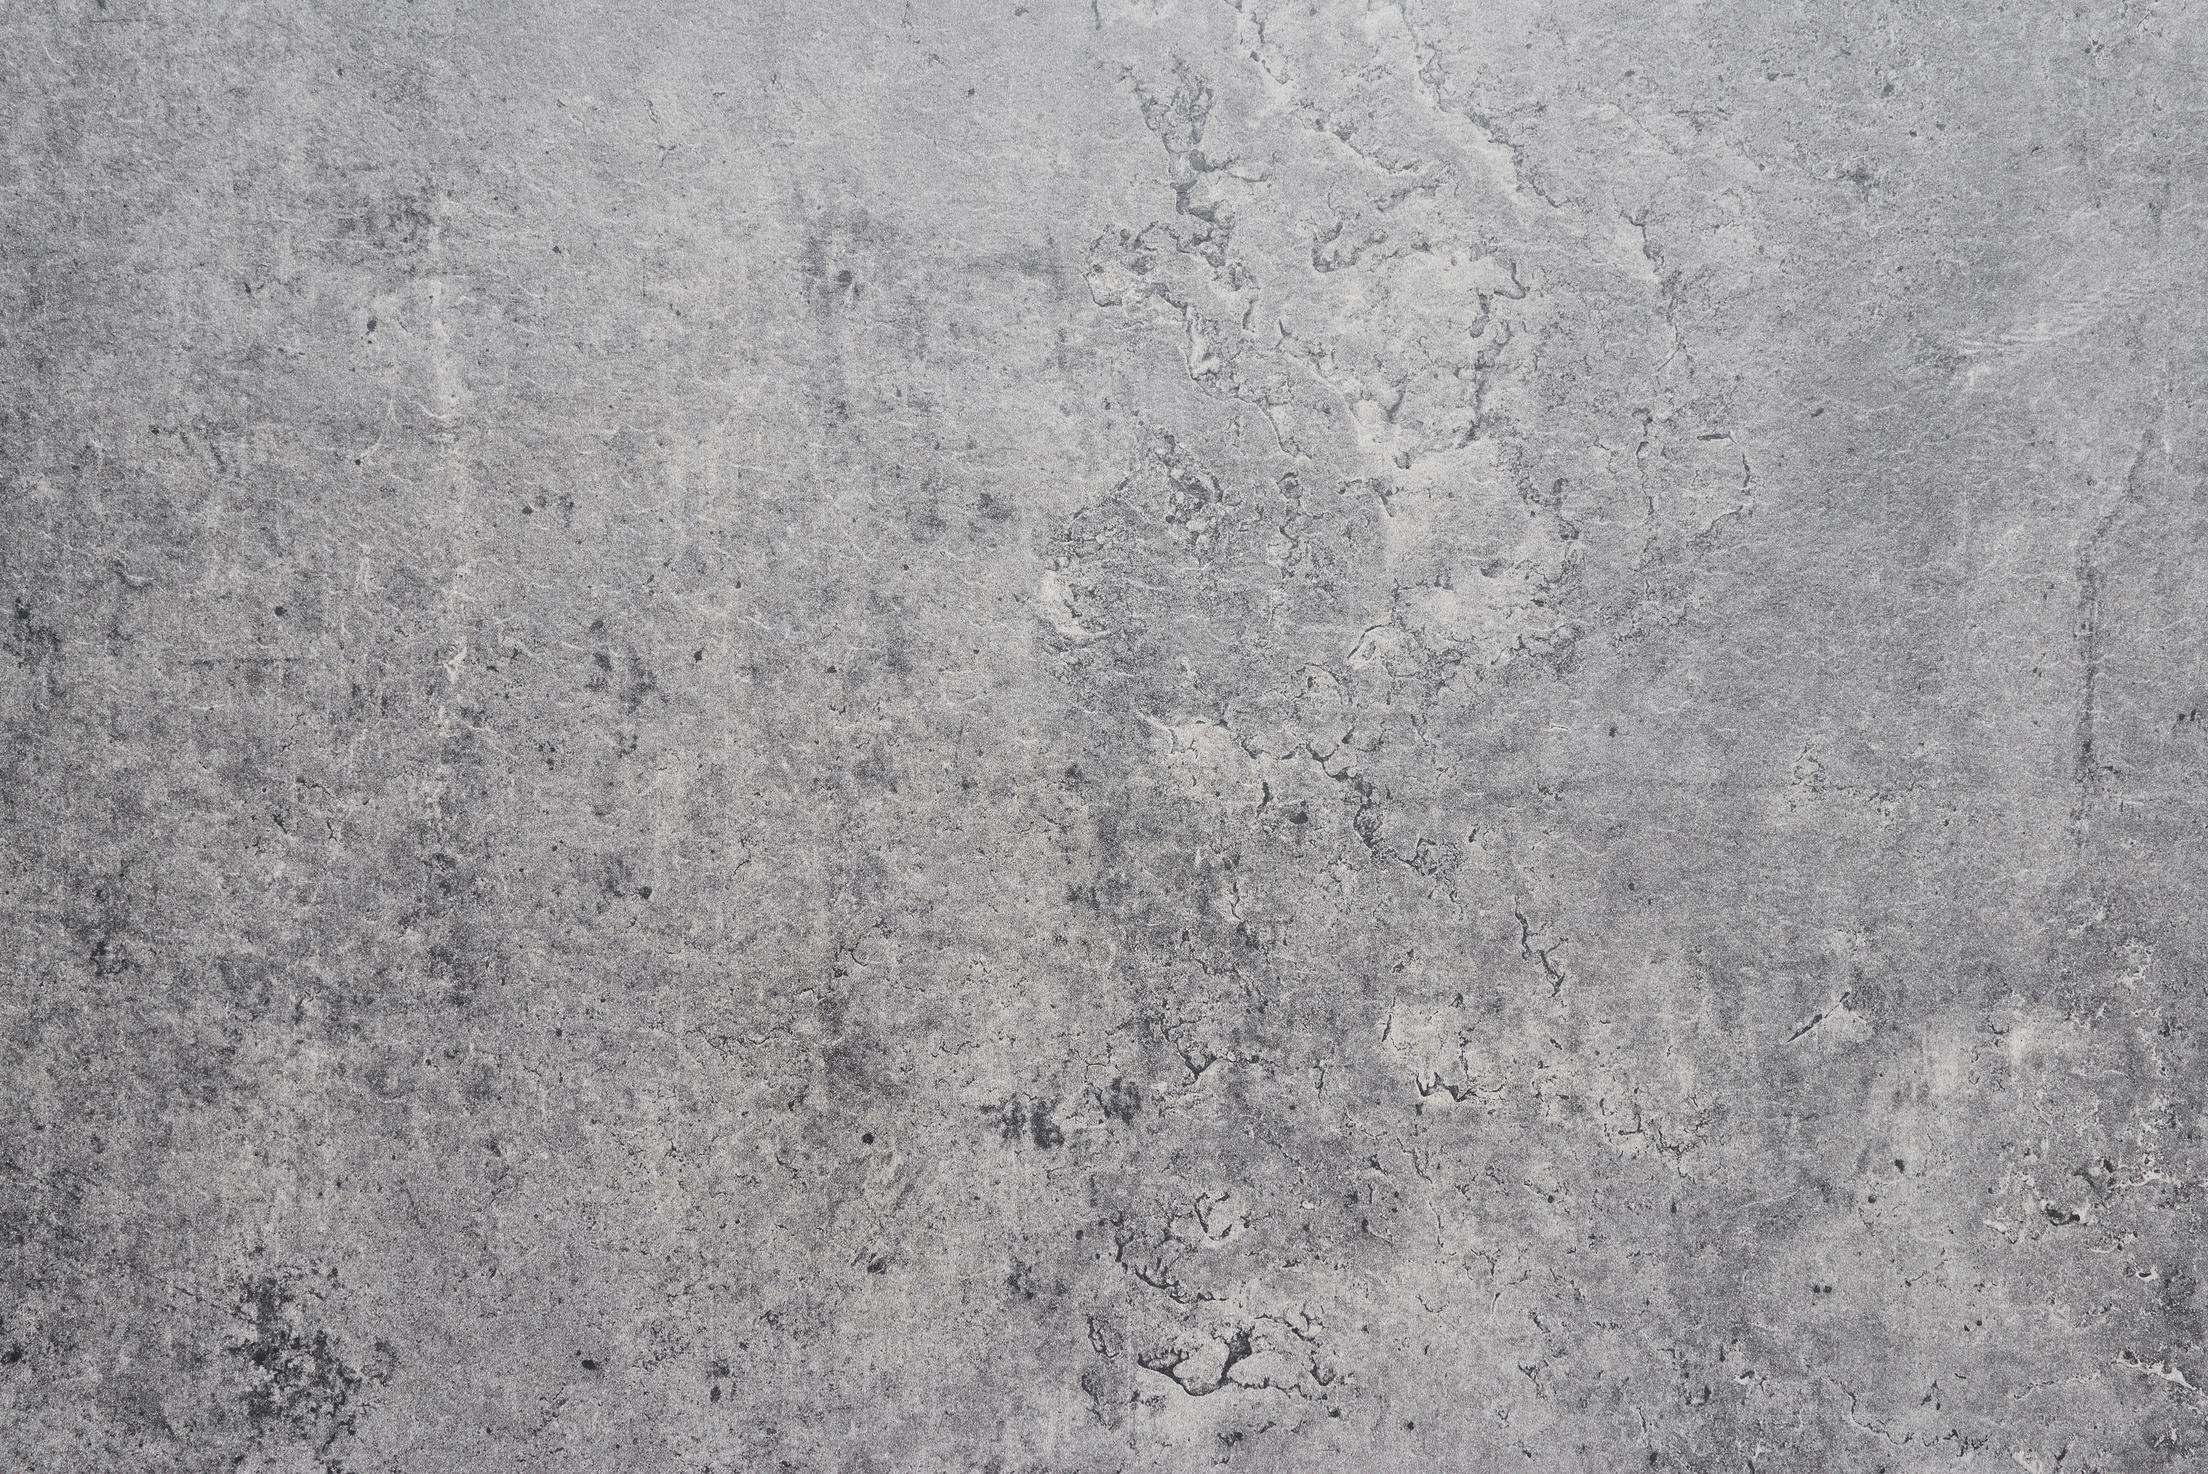 Grey Concrete Background or Concrete Texture.